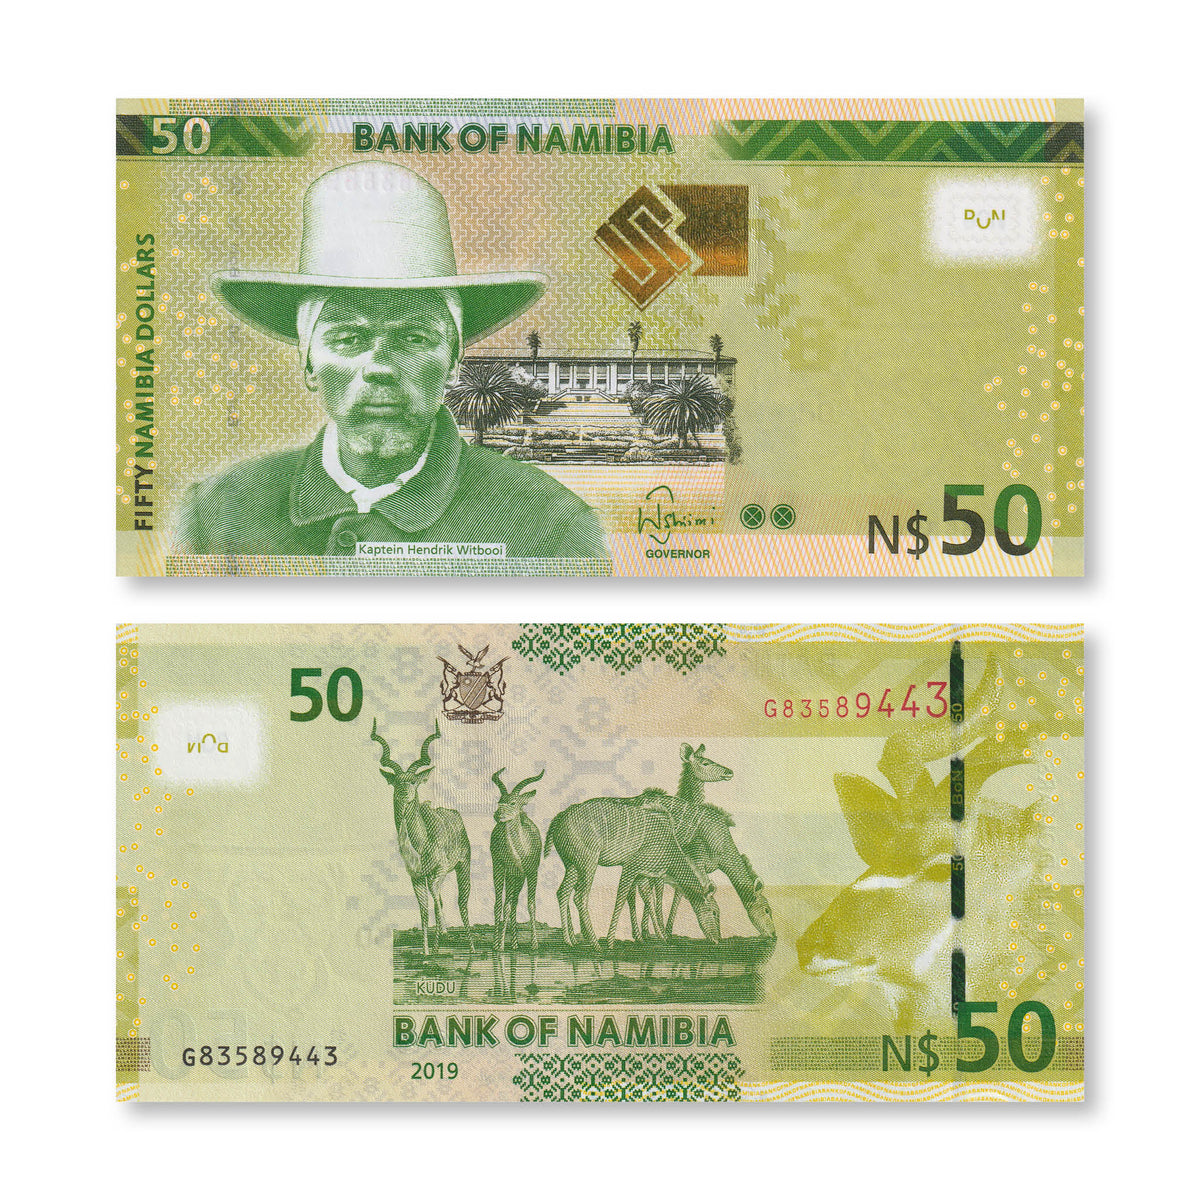 Namibia 50 Dollars, 2019, B211c, P13, UNC - Robert's World Money - World Banknotes